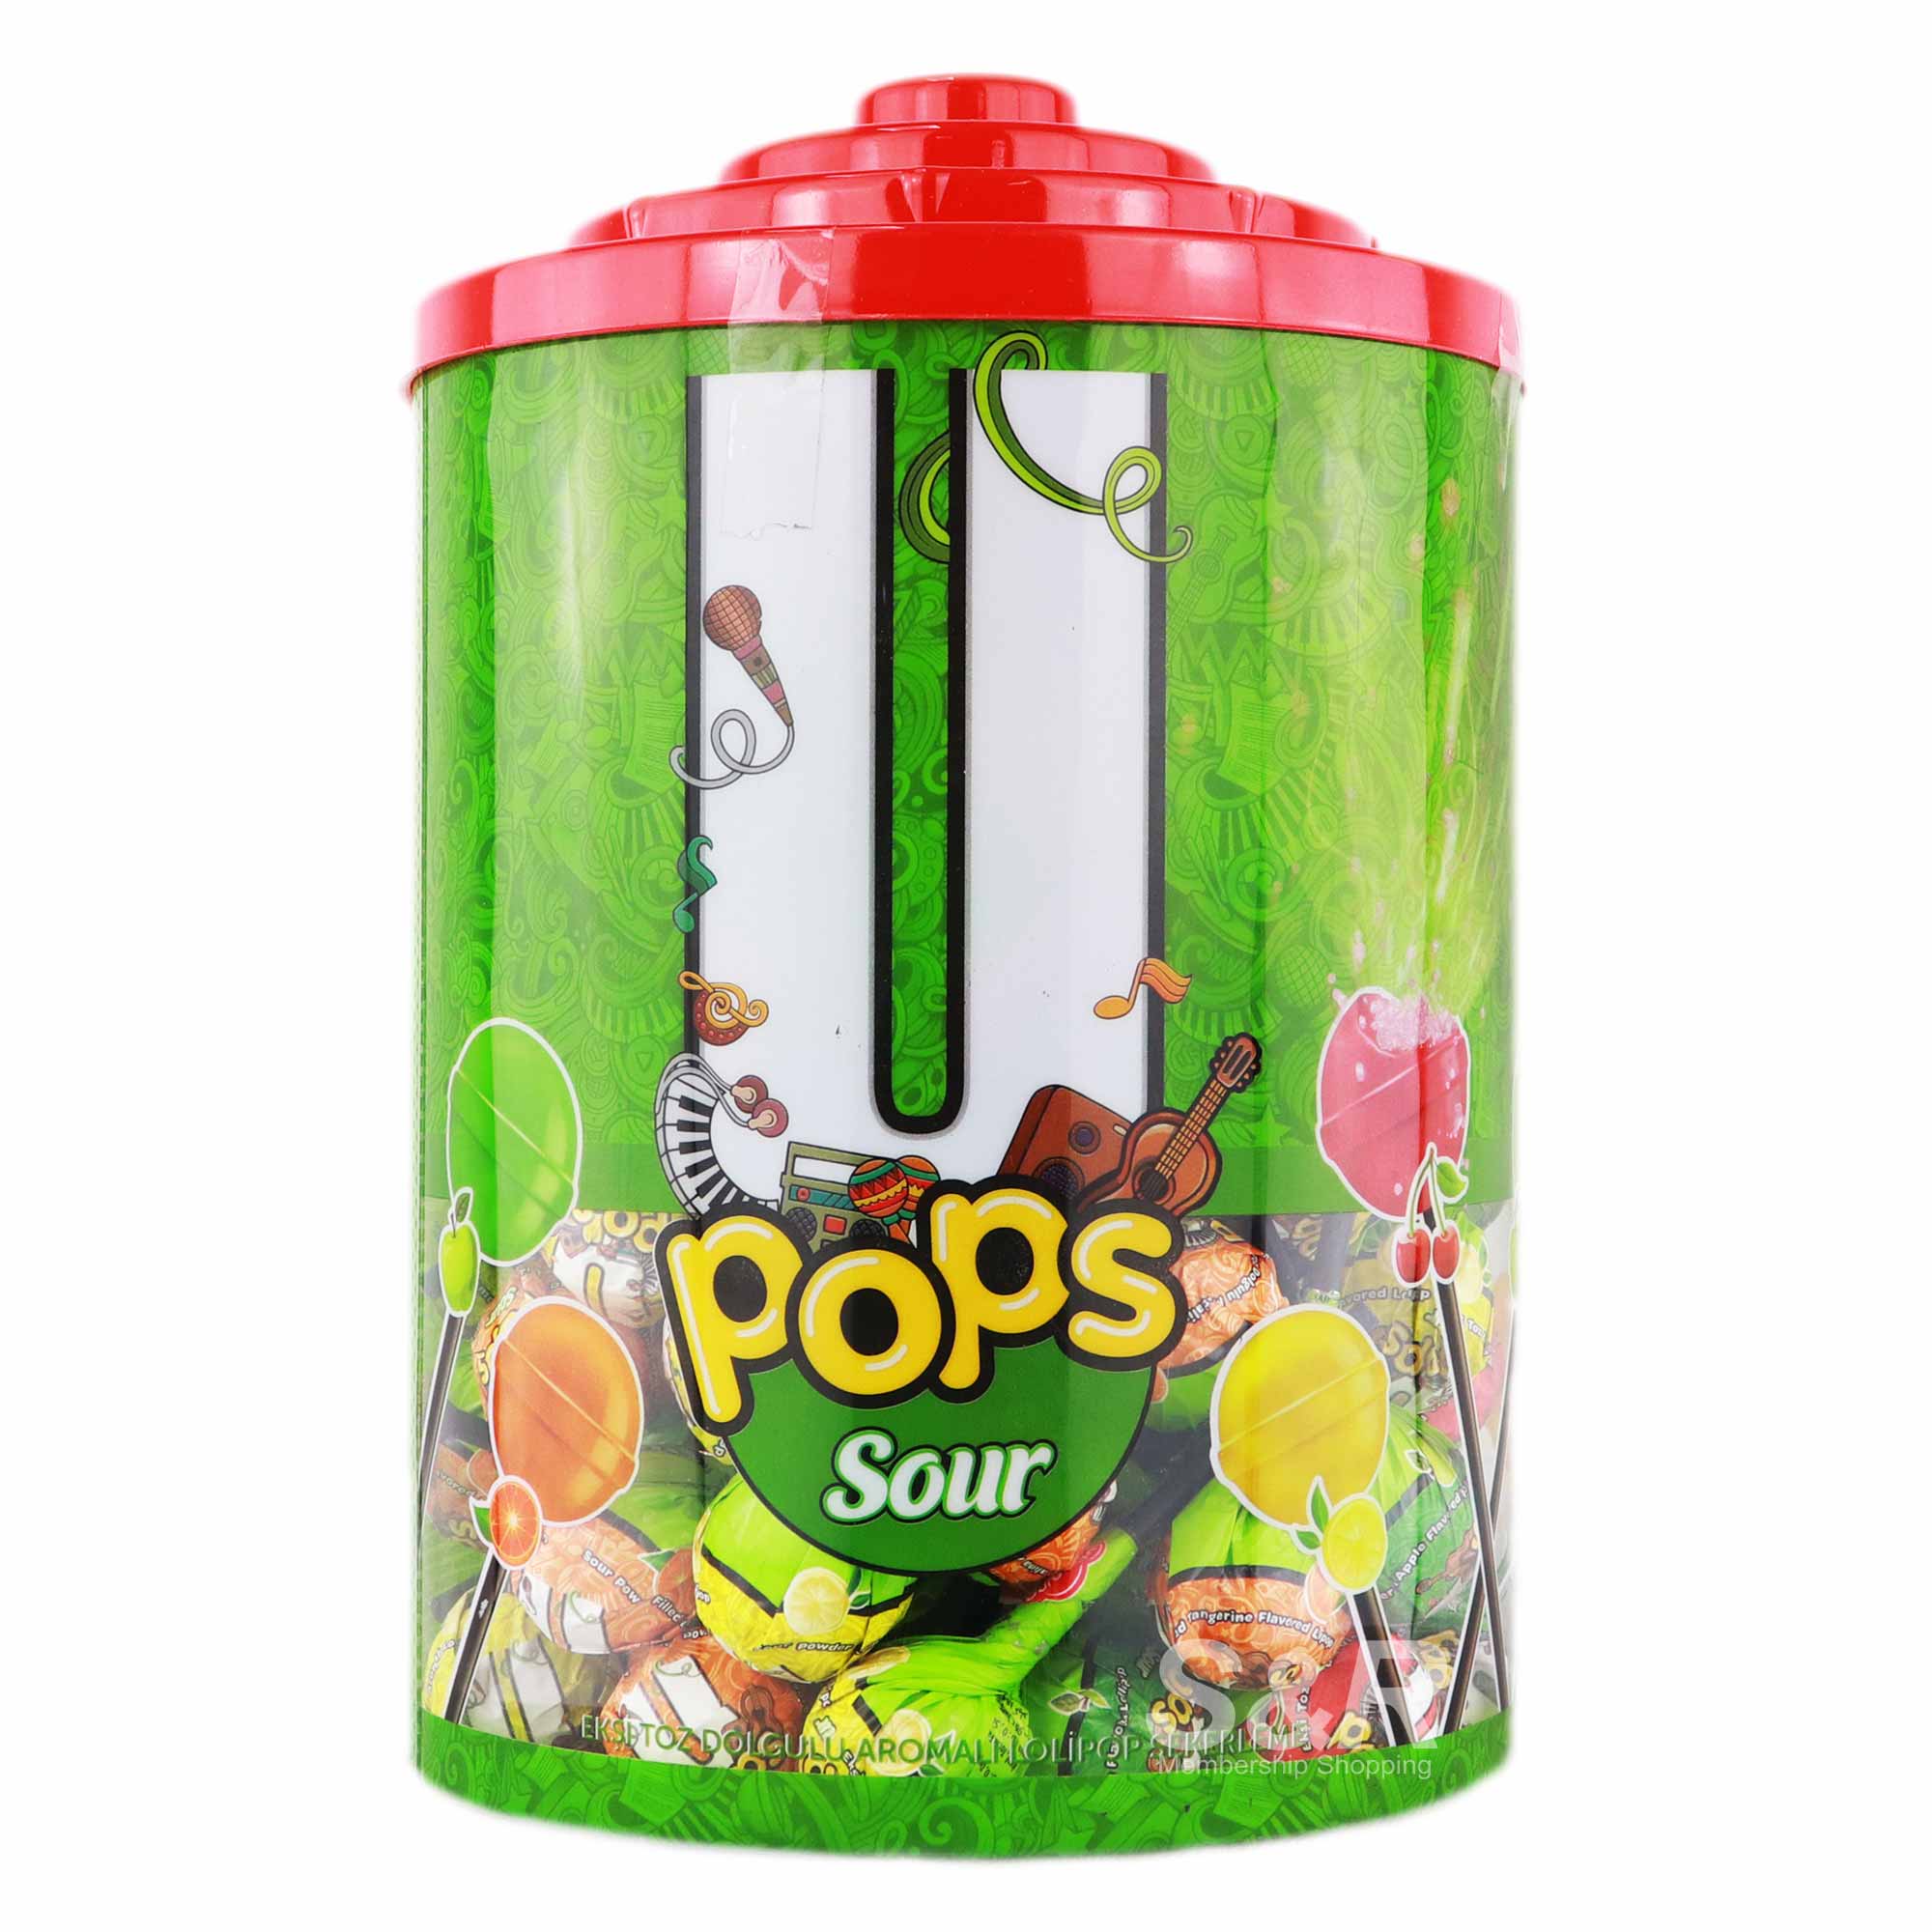 Durukan U Pops Sour 60 lollipops